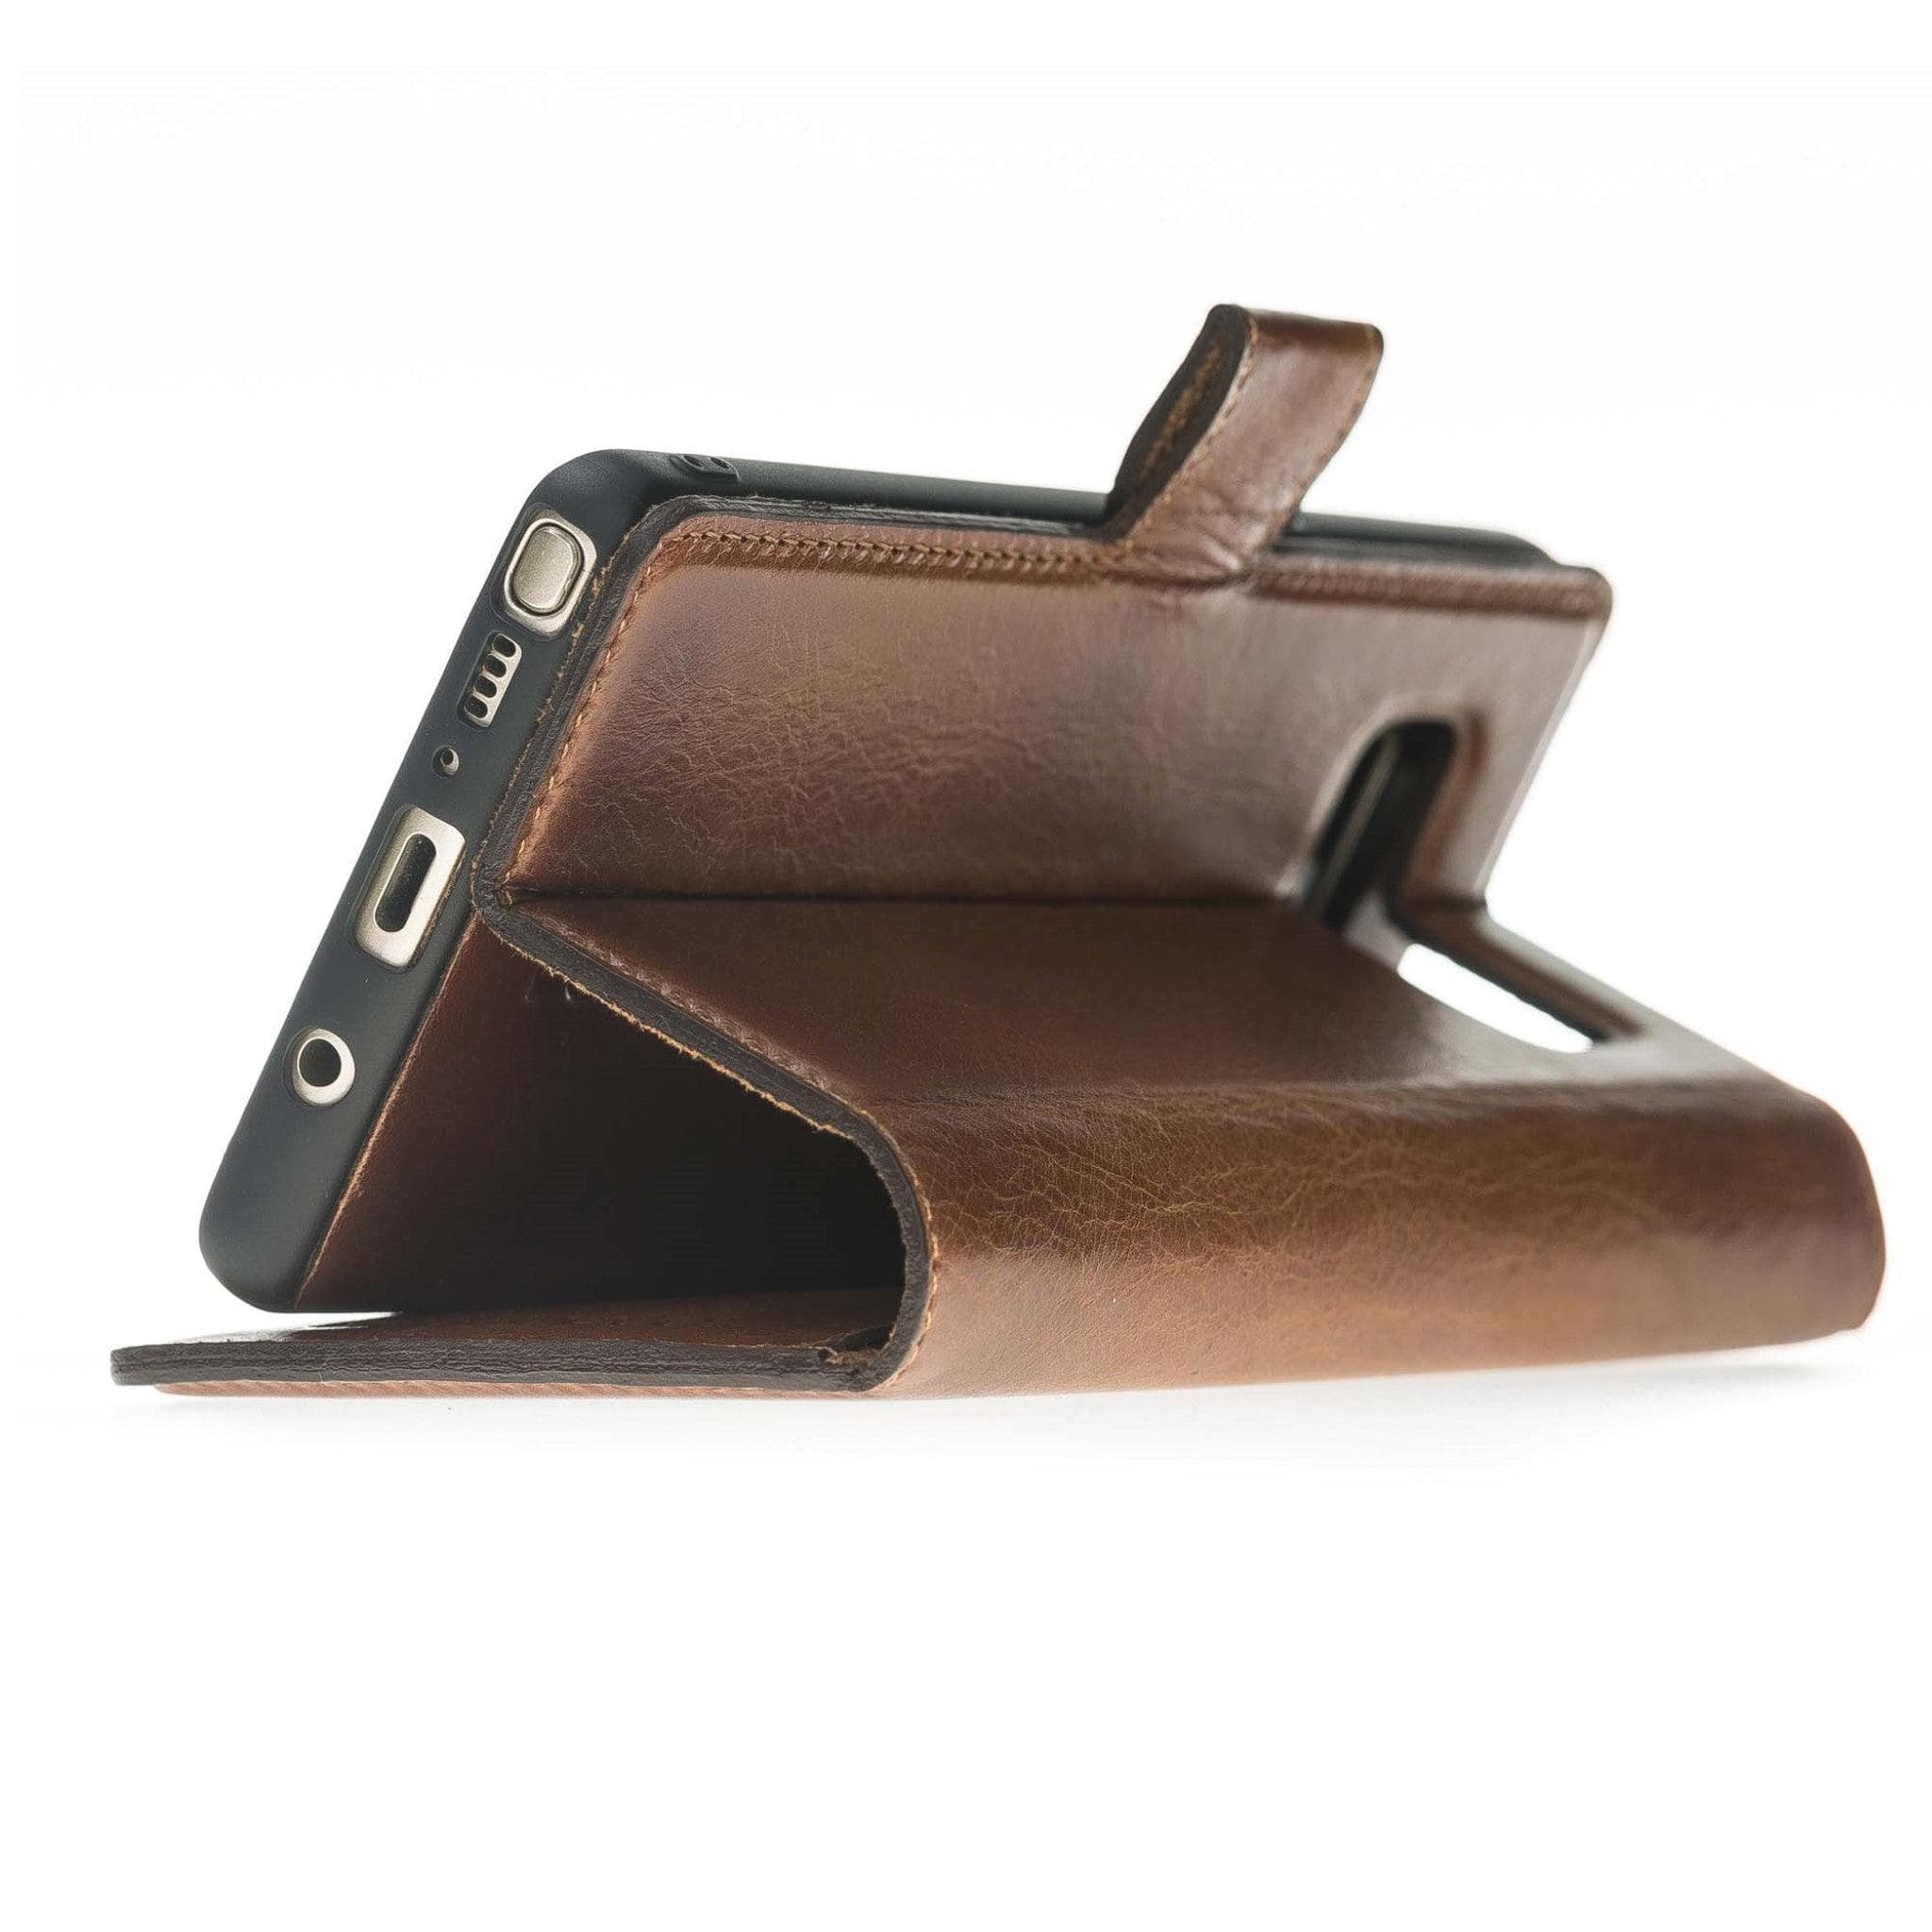 Samsung Galaxy Note 8 Series Leather Wallet Case Bouletta LTD